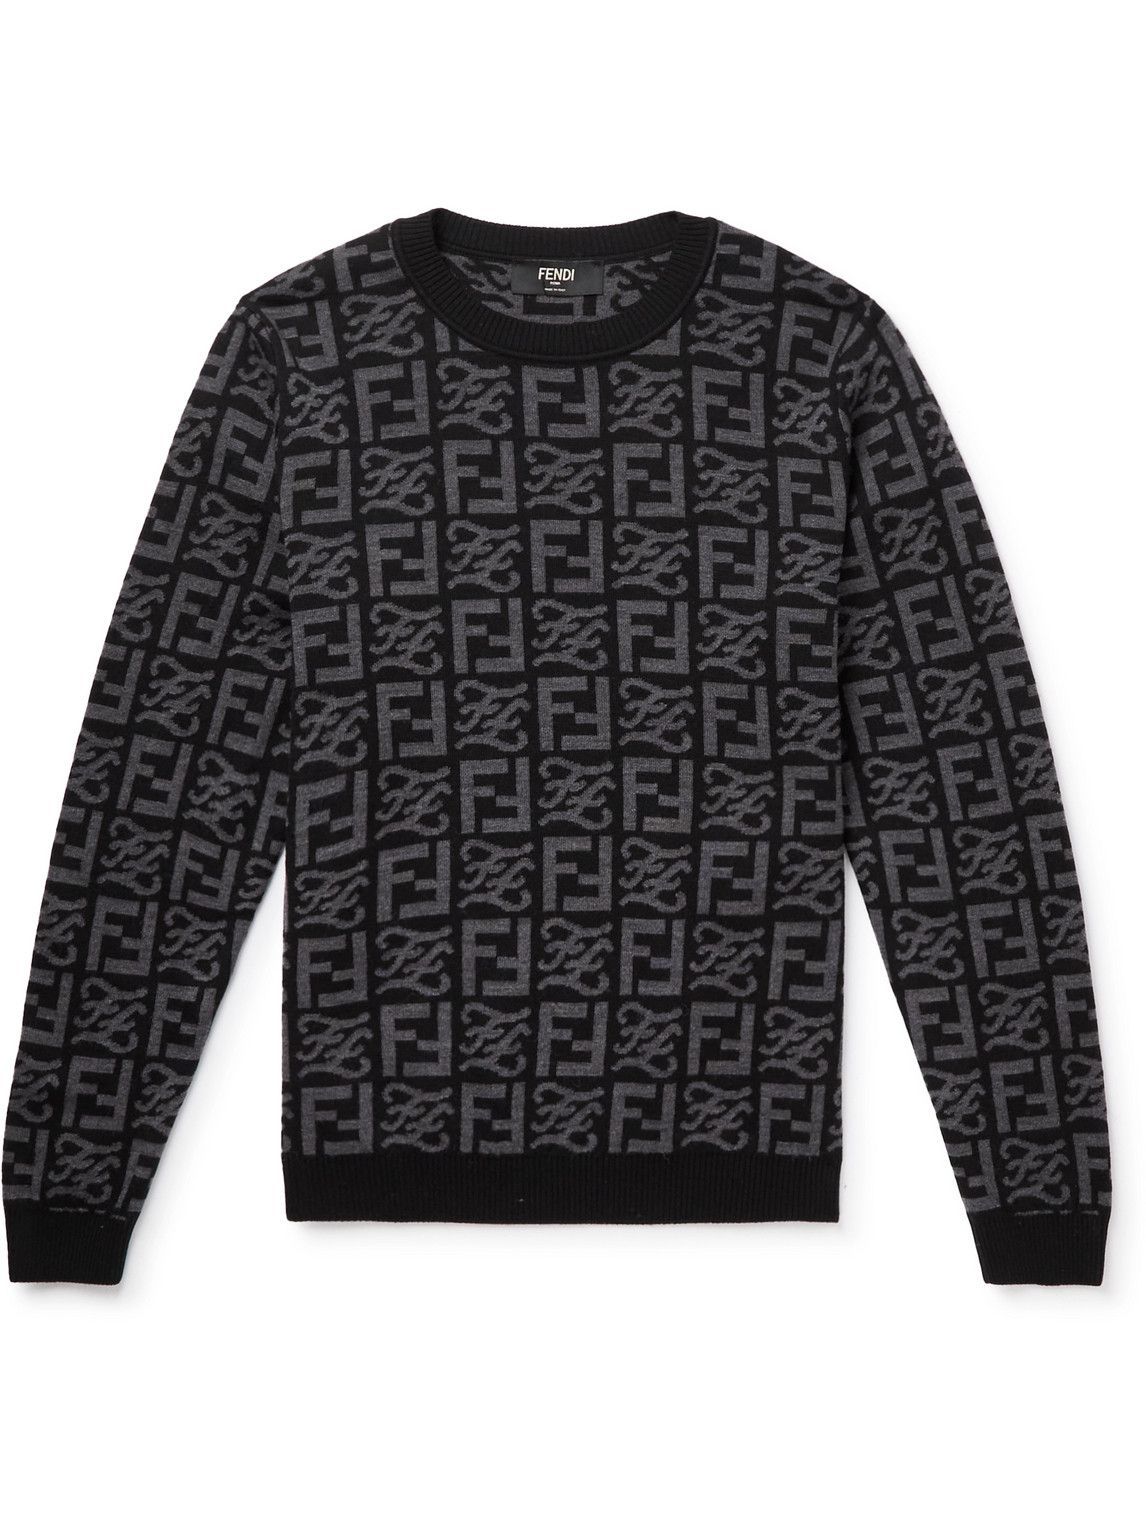 Fendi - Logo-Intarsia Wool Sweater - Black Fendi